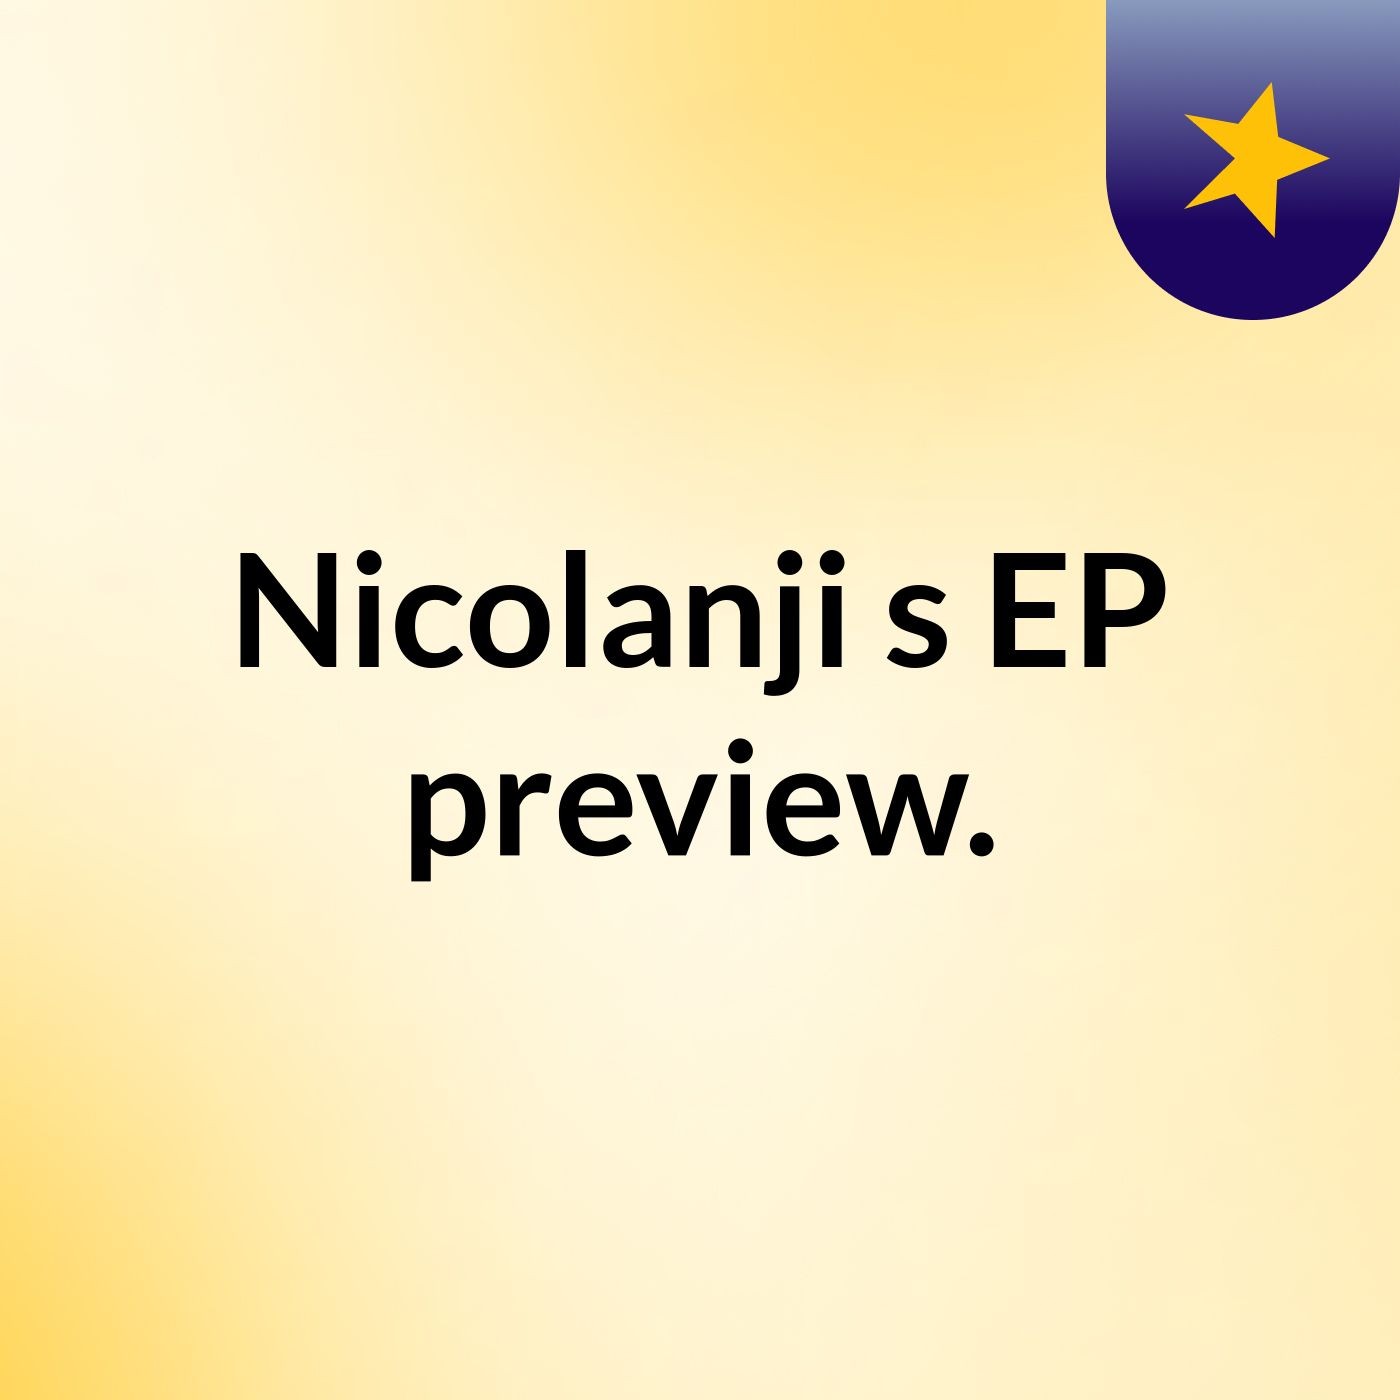 Nicolanji's EP preview.